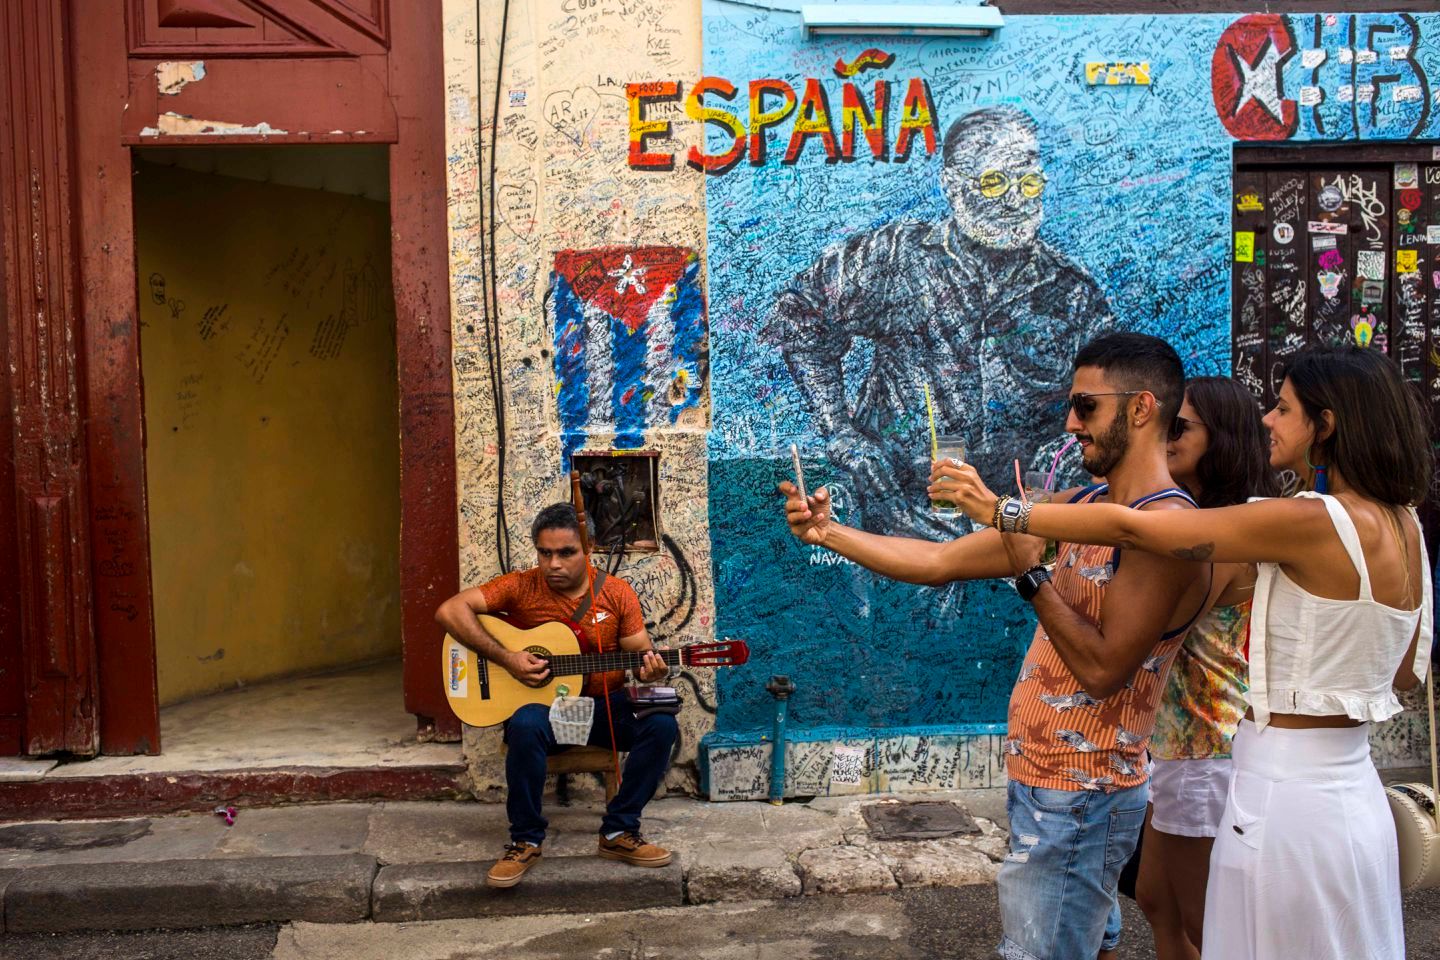 Group of people taking selfies on the street in Cuba